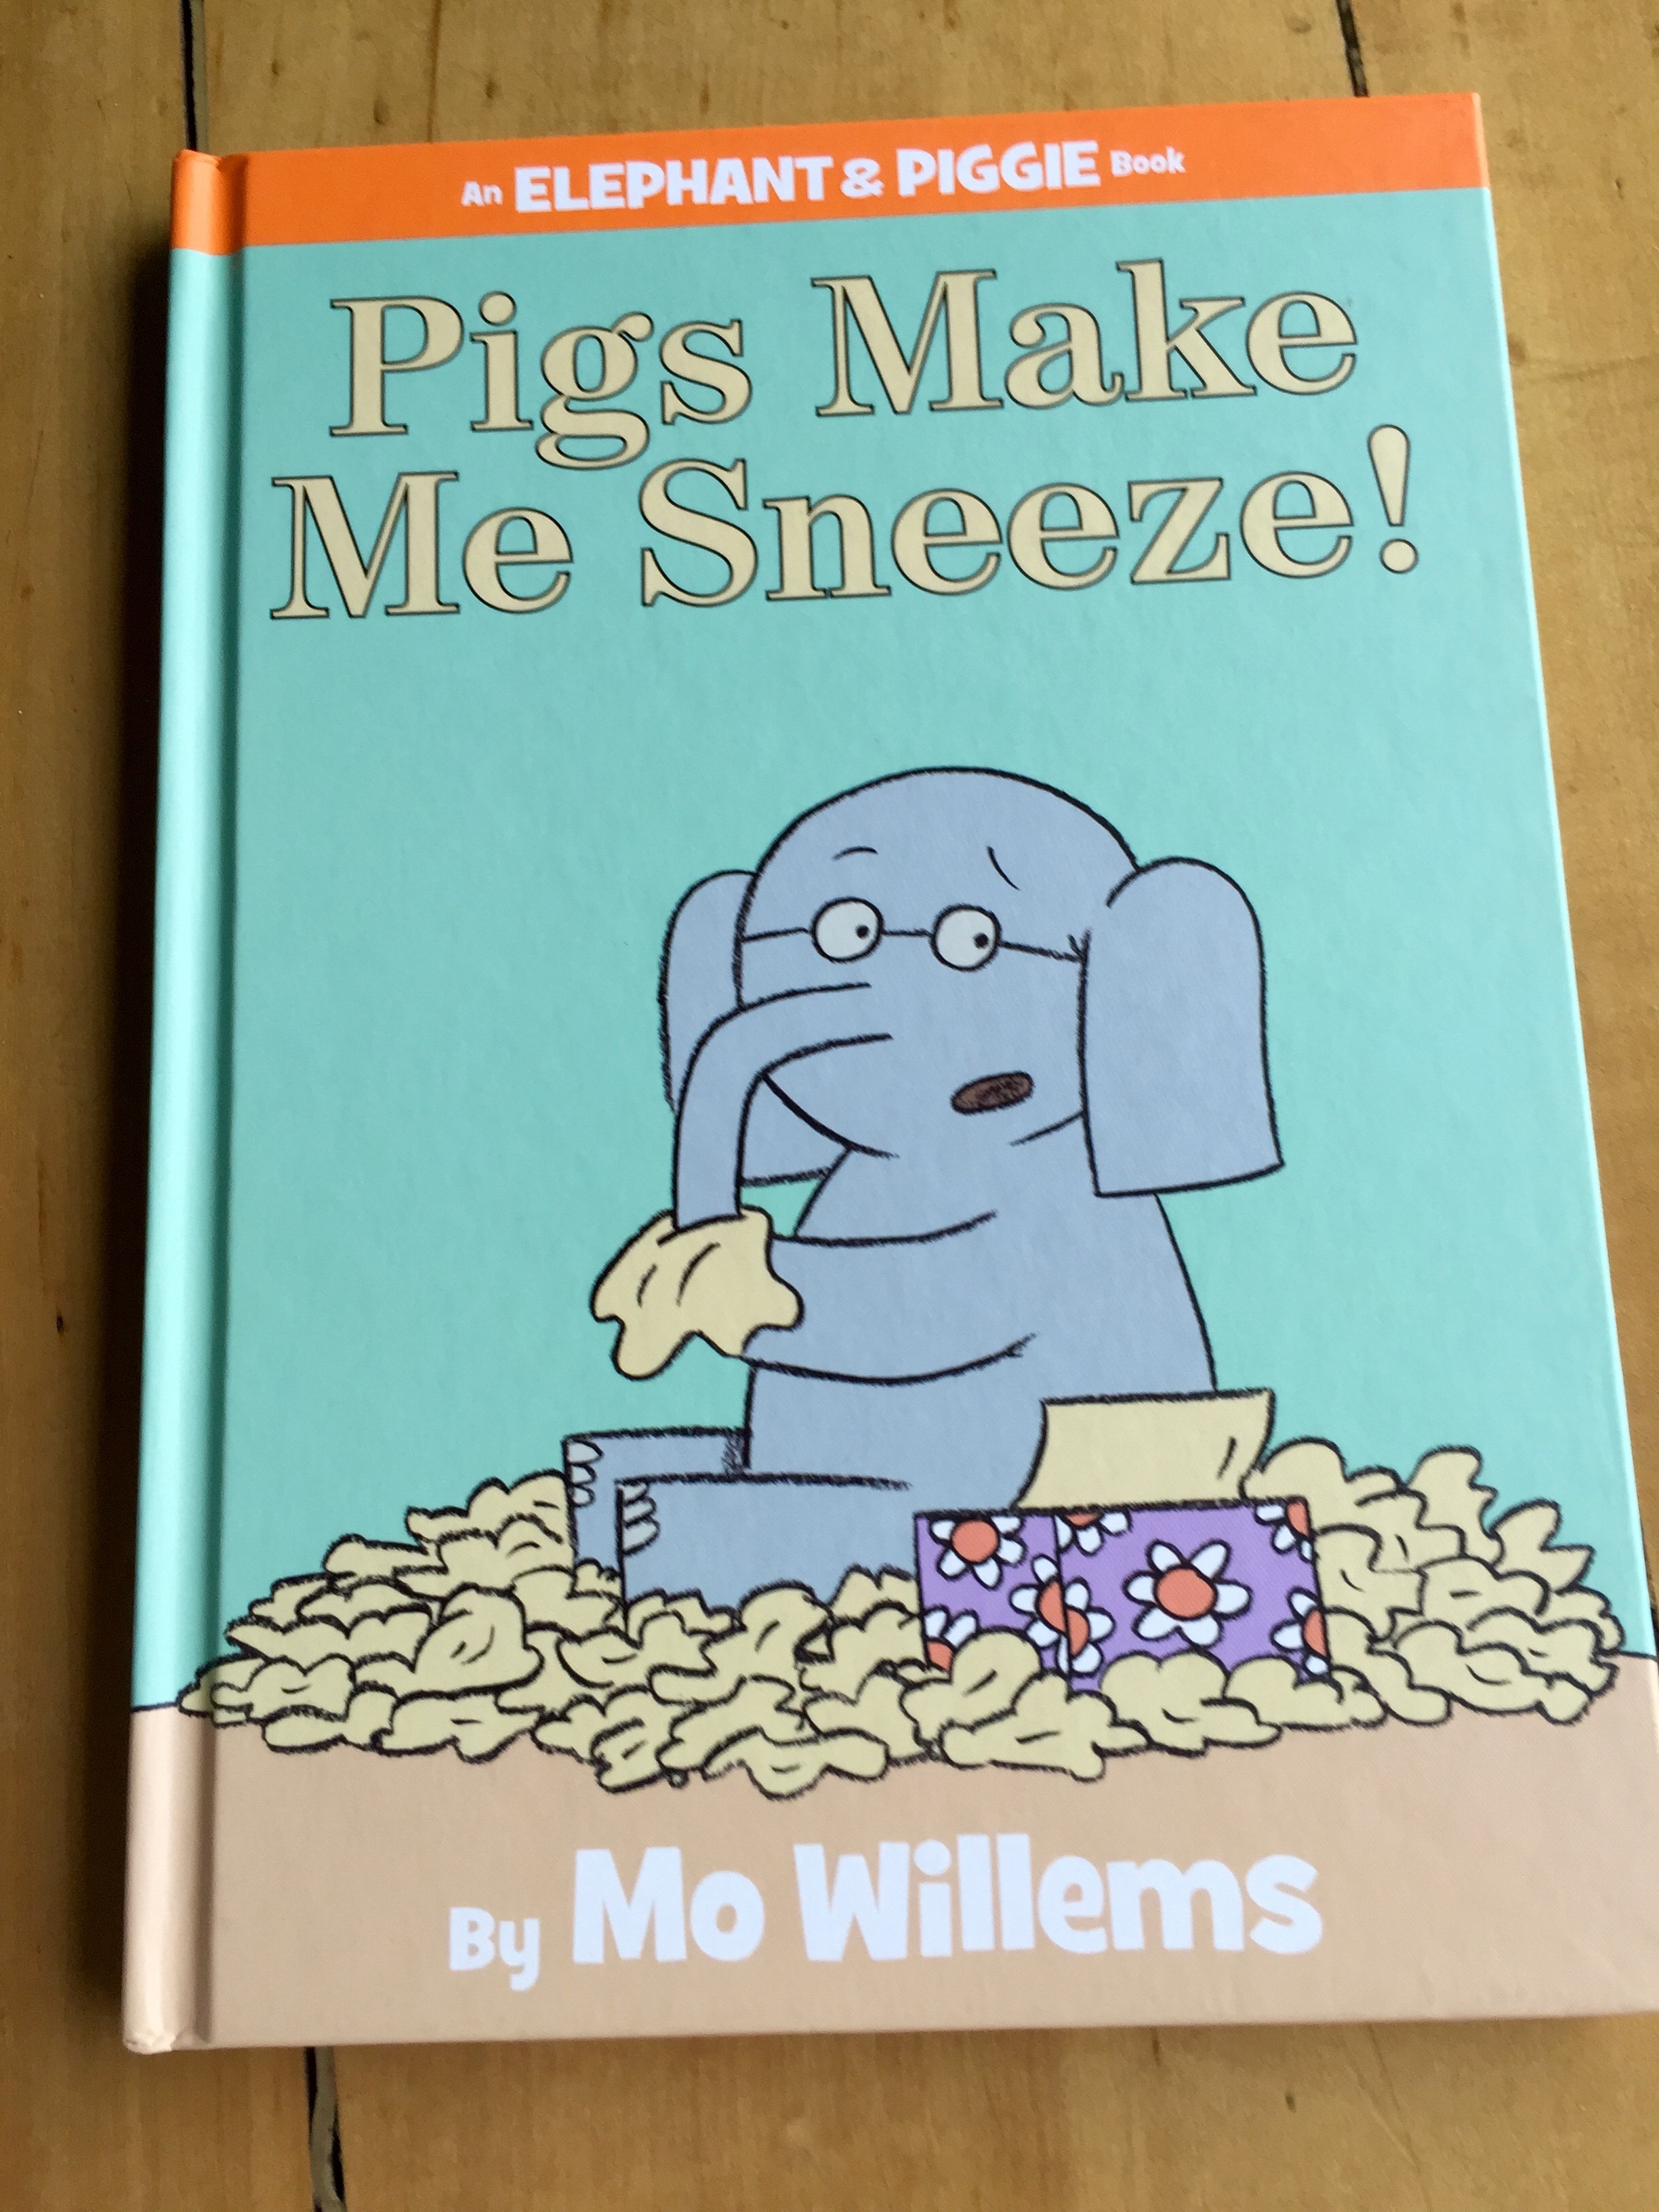 Pigs Make Me Sneezy